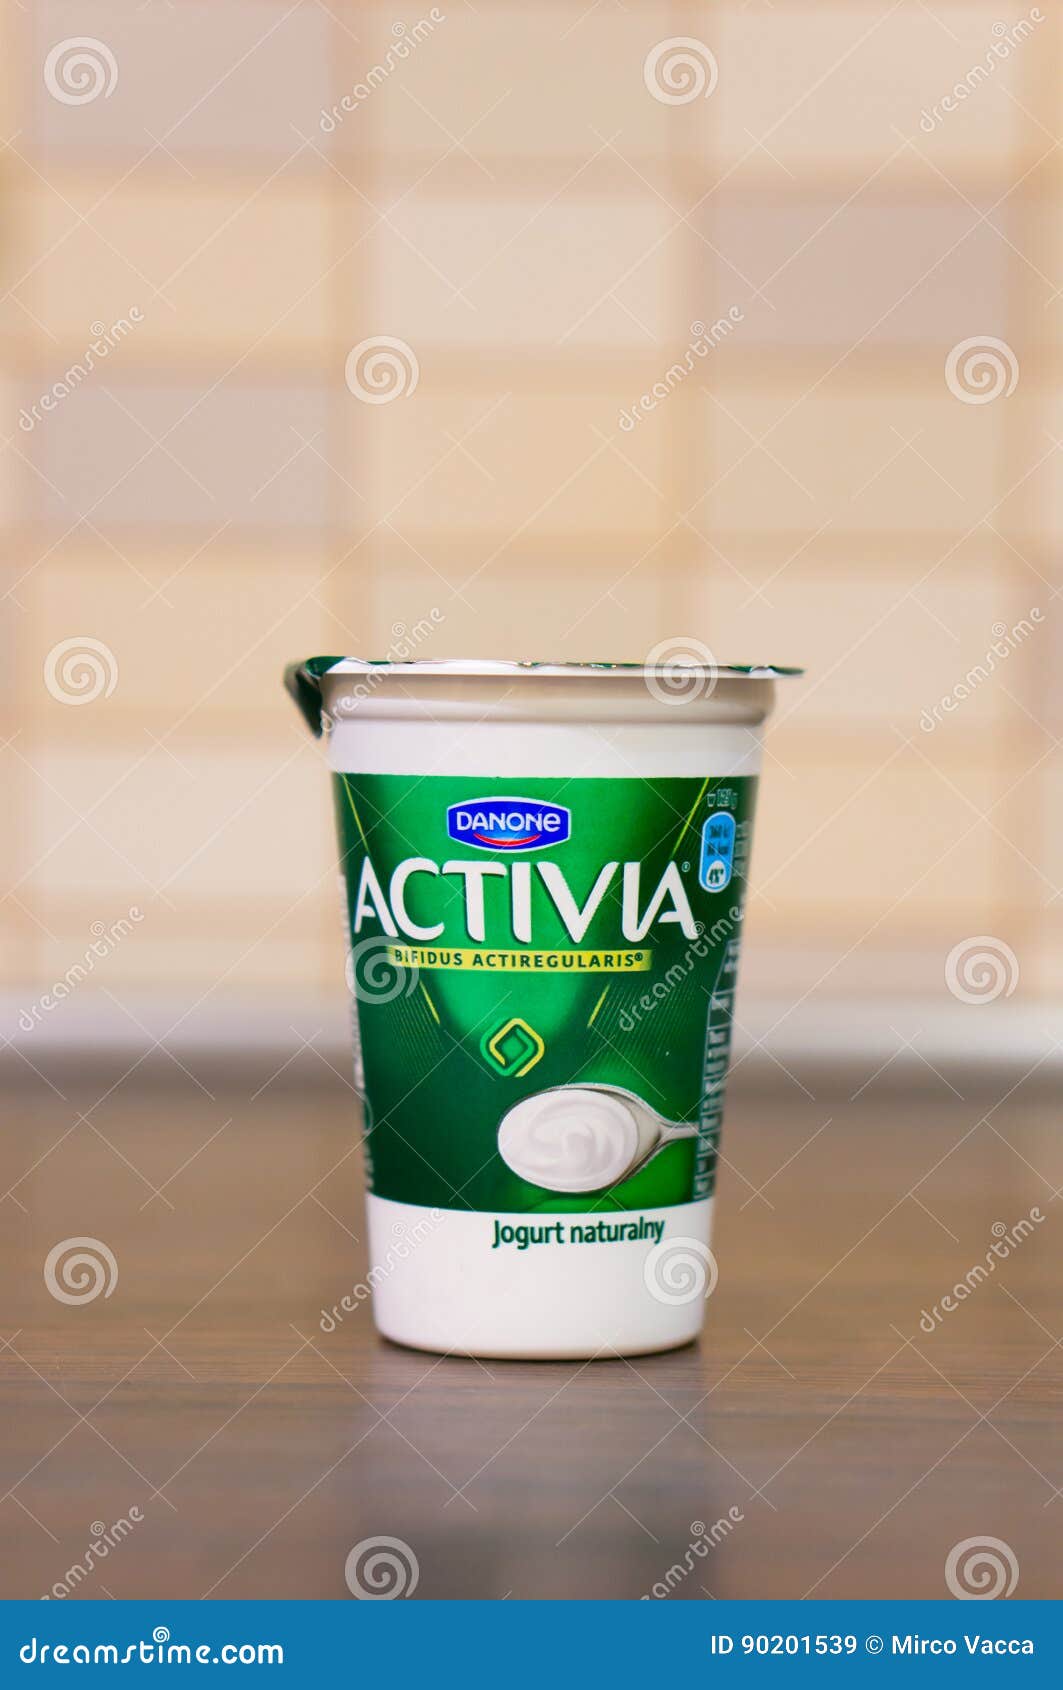 Danone Activia food of yogurt Image stock editorial - image. 90201539